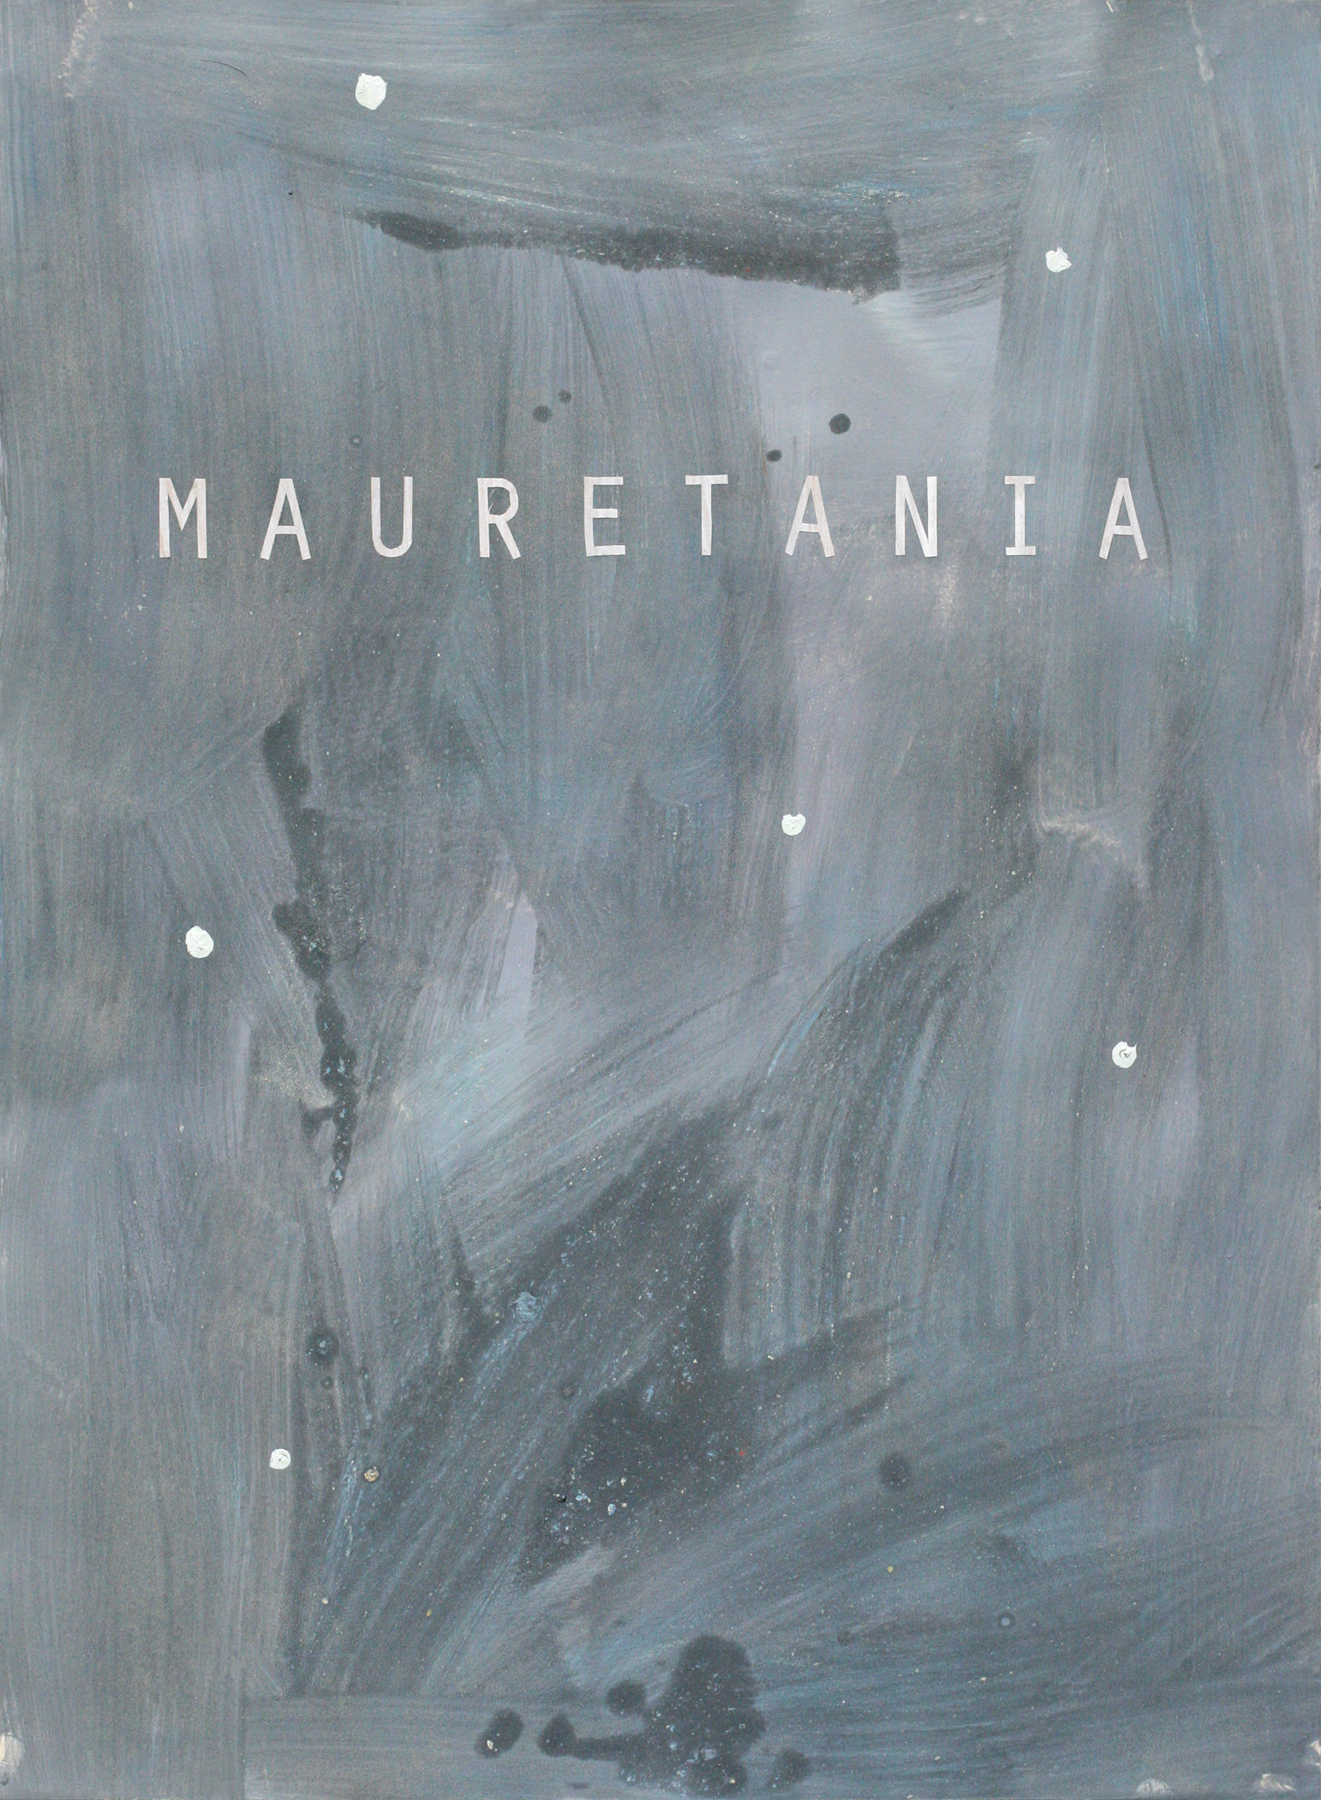 Mauretania, acrylic on paper on board, 30" x 22"